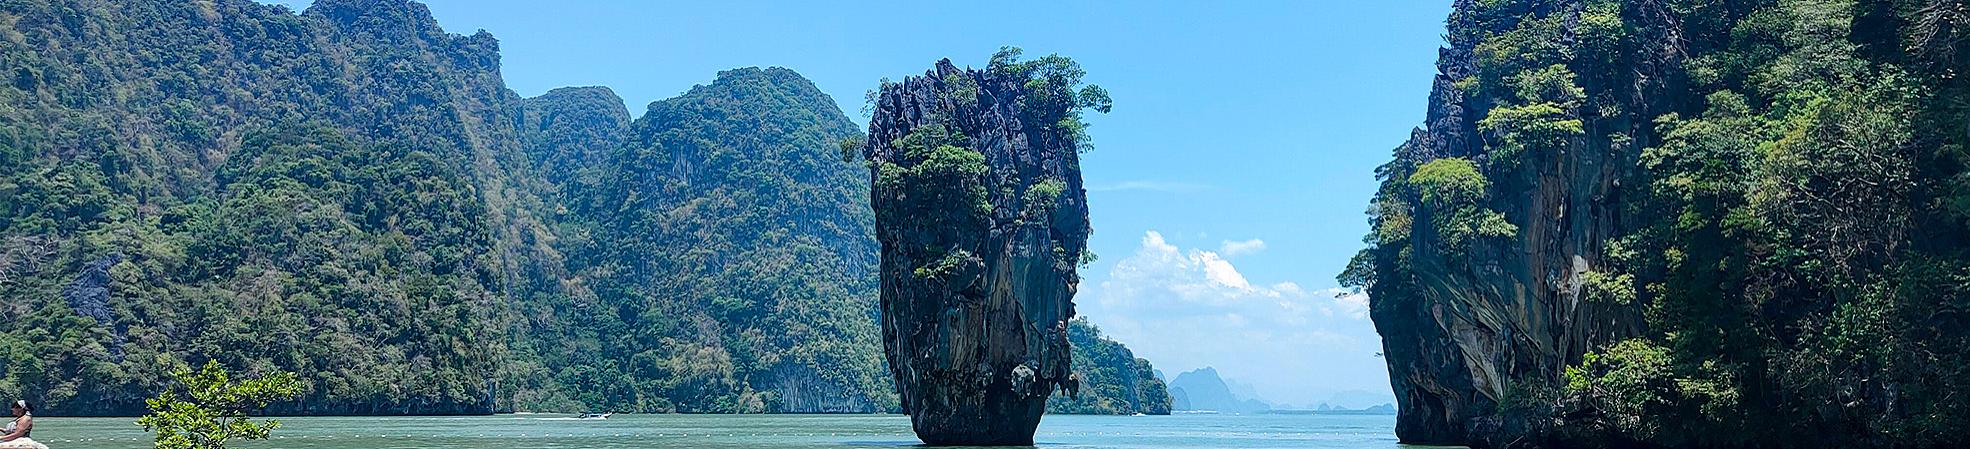 Thailand Tourist Attractions